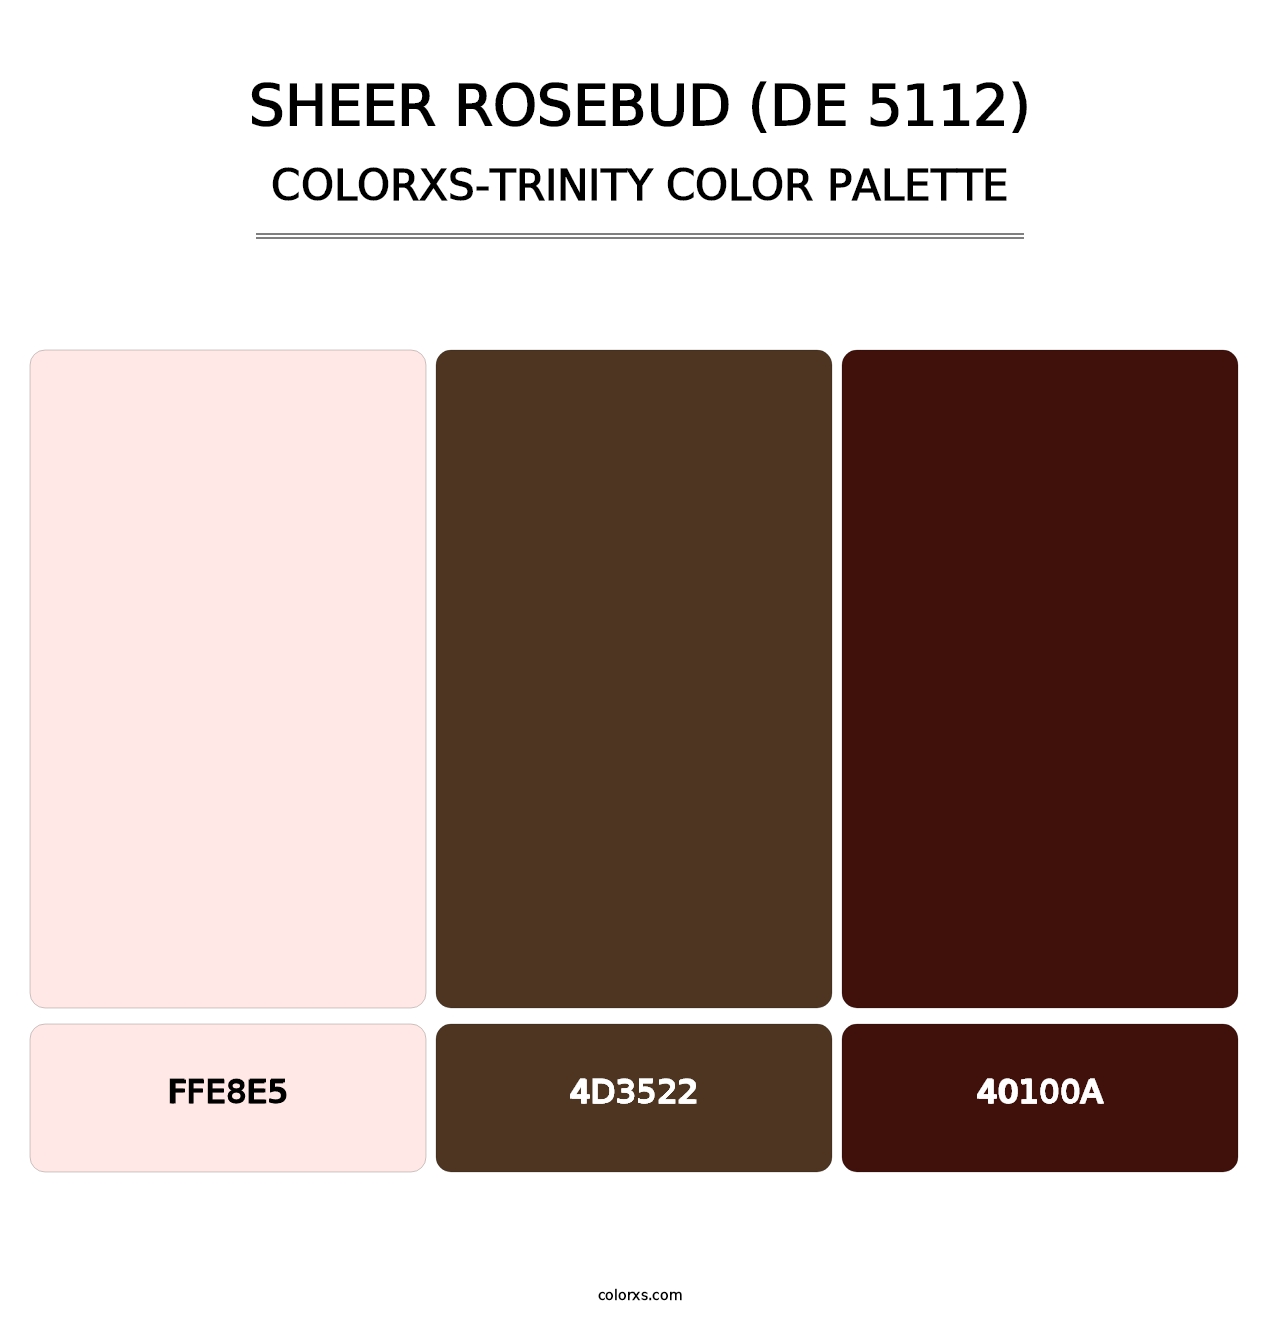 Sheer Rosebud (DE 5112) - Colorxs Trinity Palette